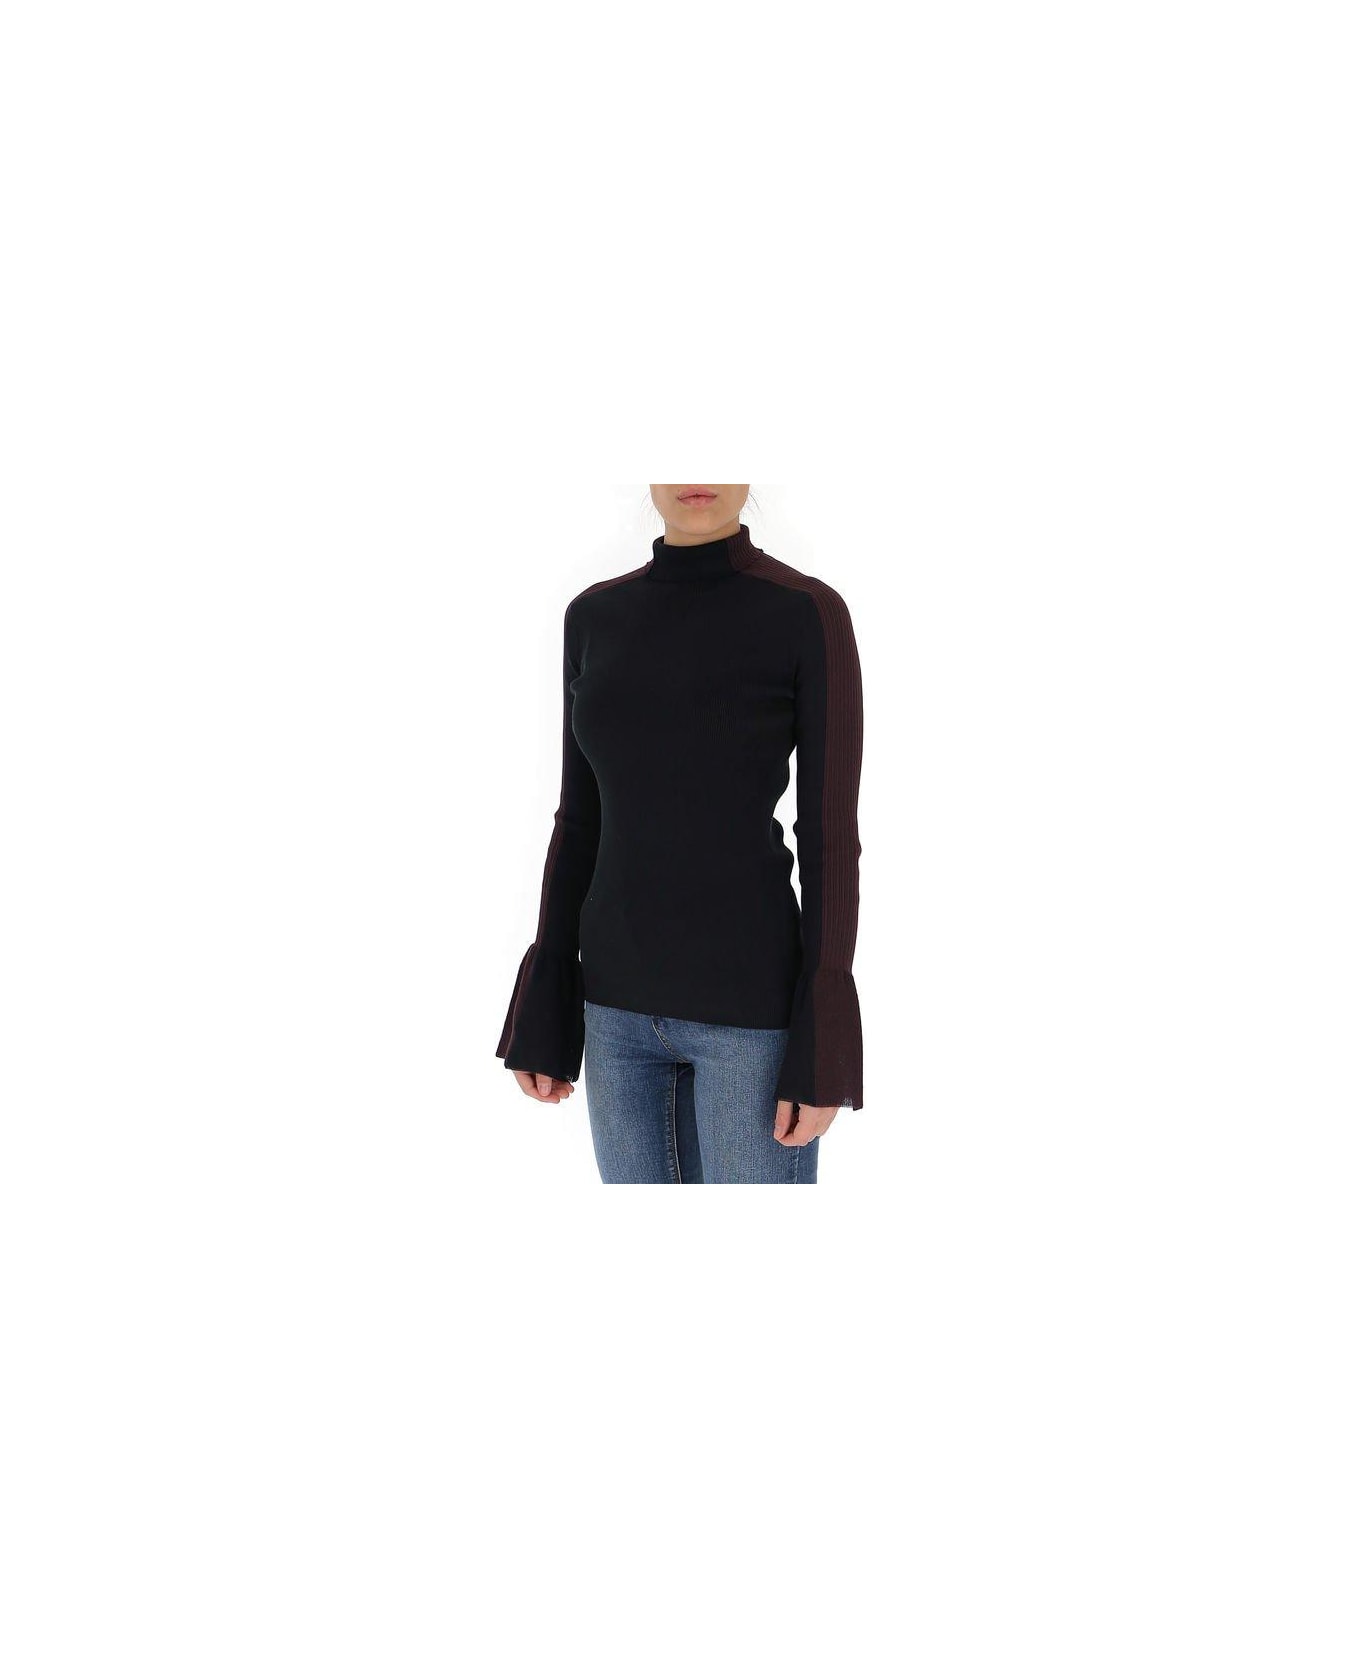 Moncler 1952 High Neck Contrast Trim Sweater - Black